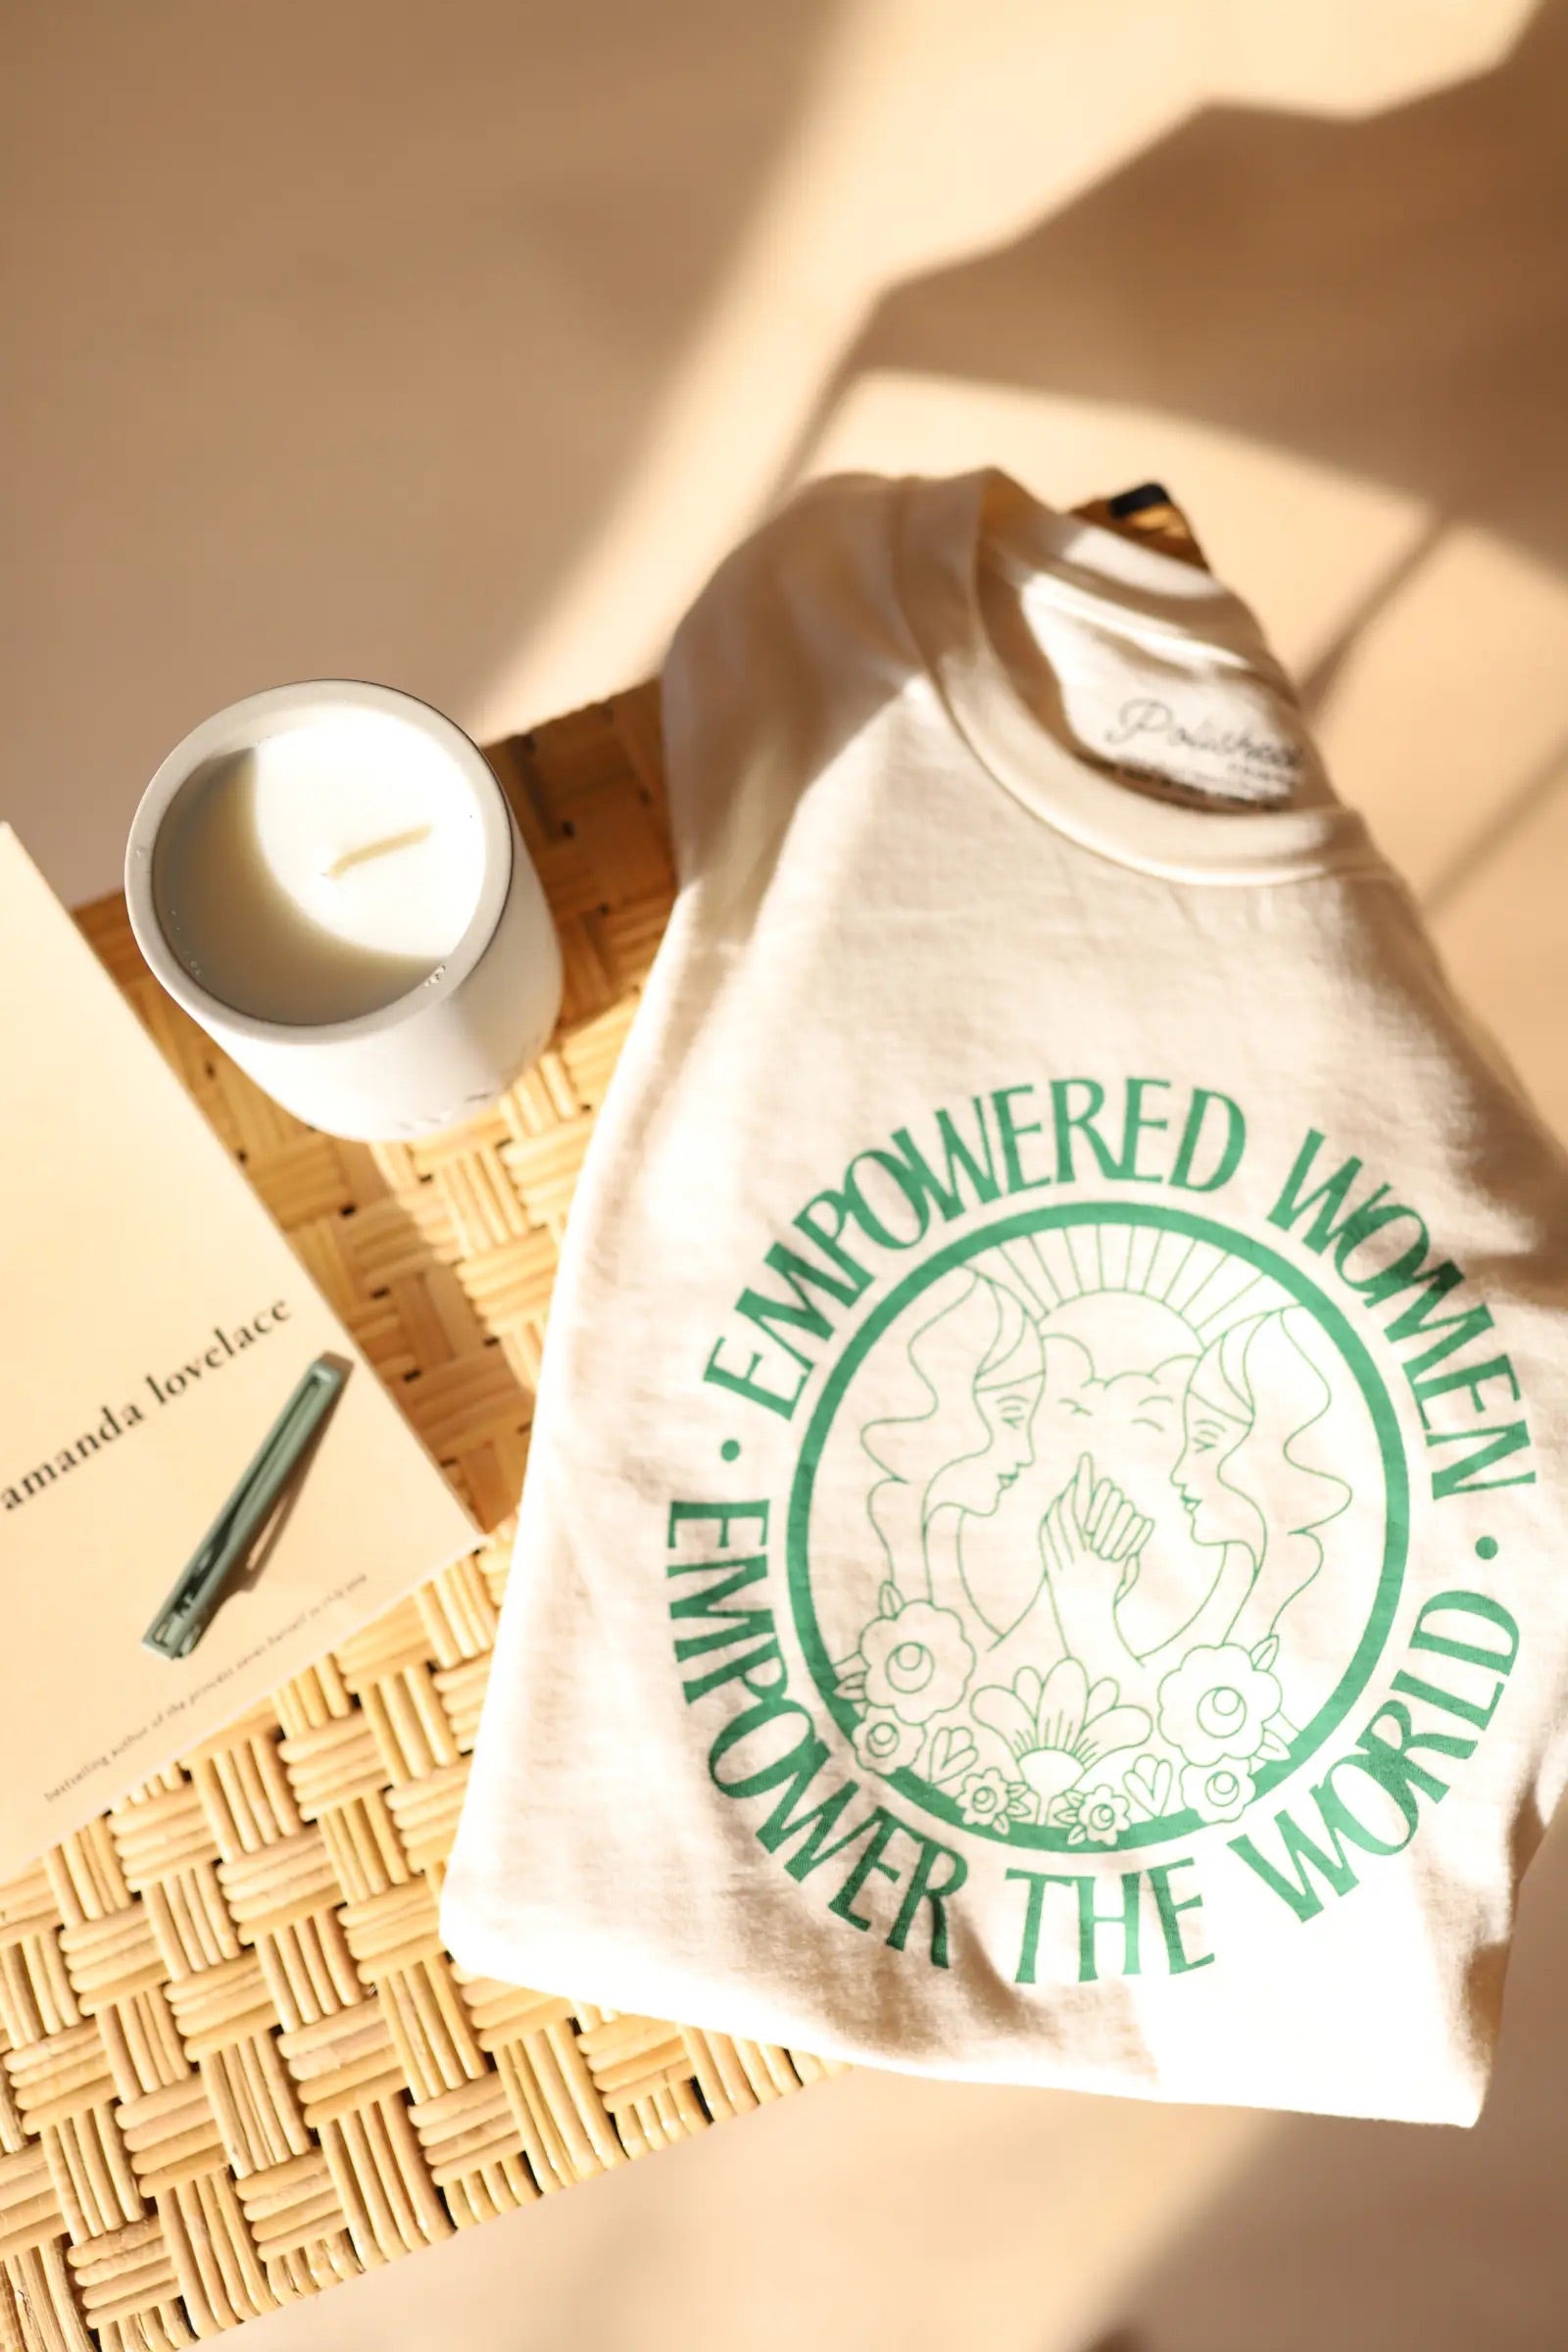 empowered women t-shirt | polished prints